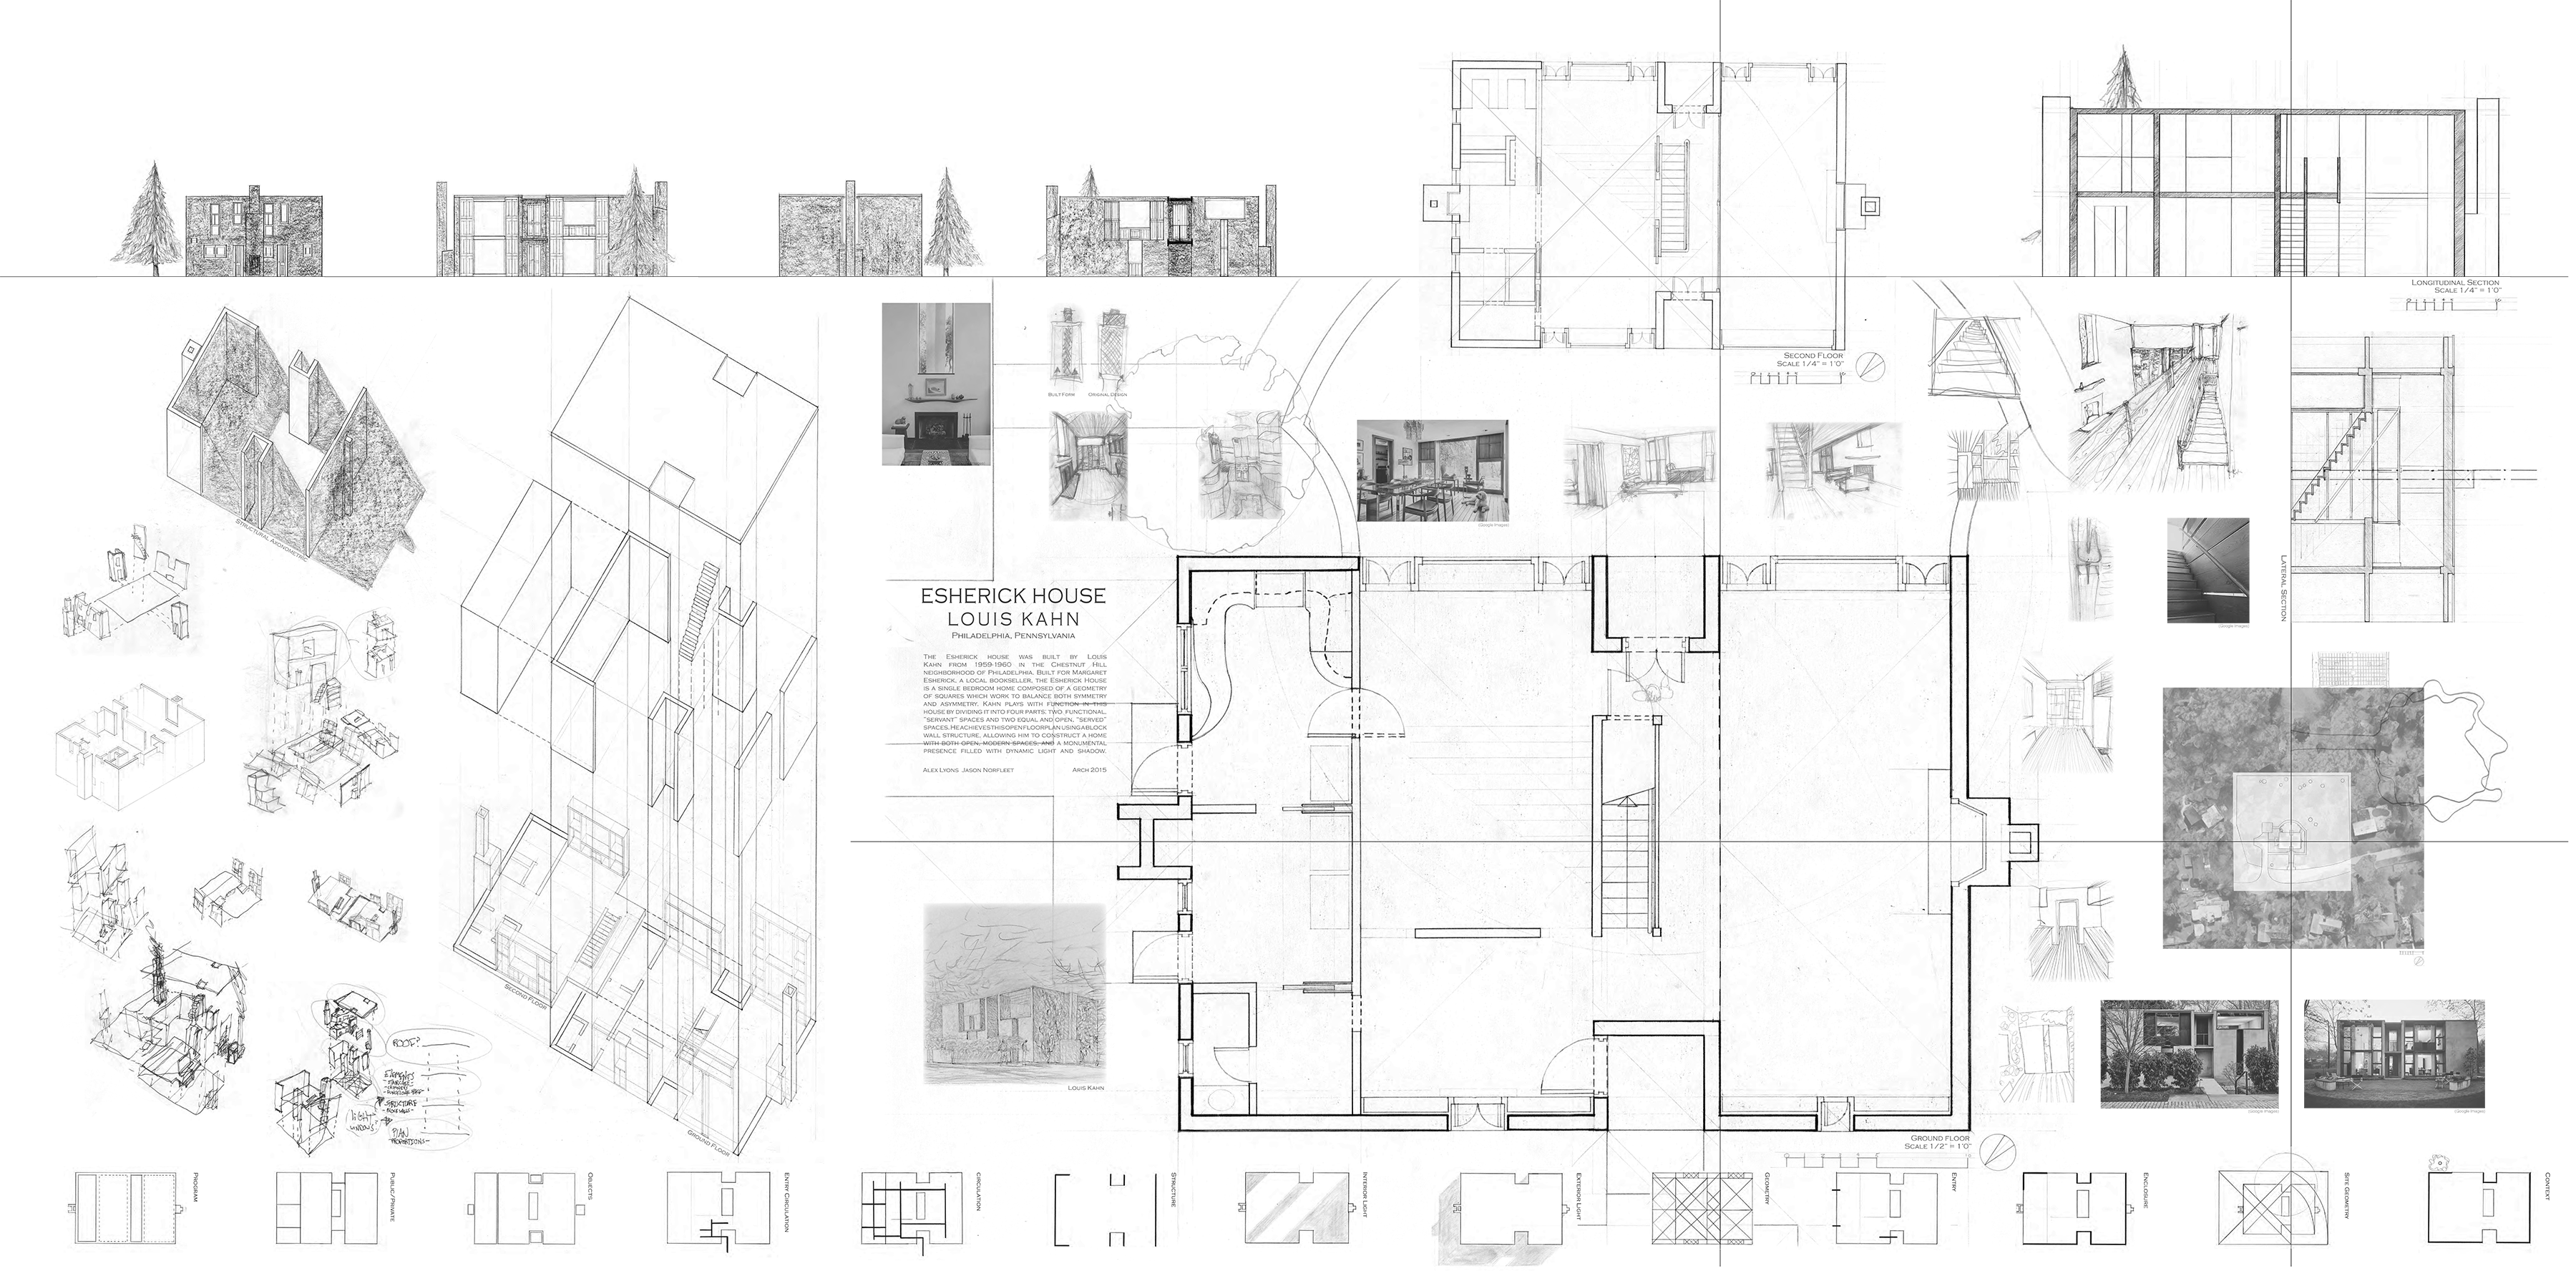 Esherick House by Louis Kahn